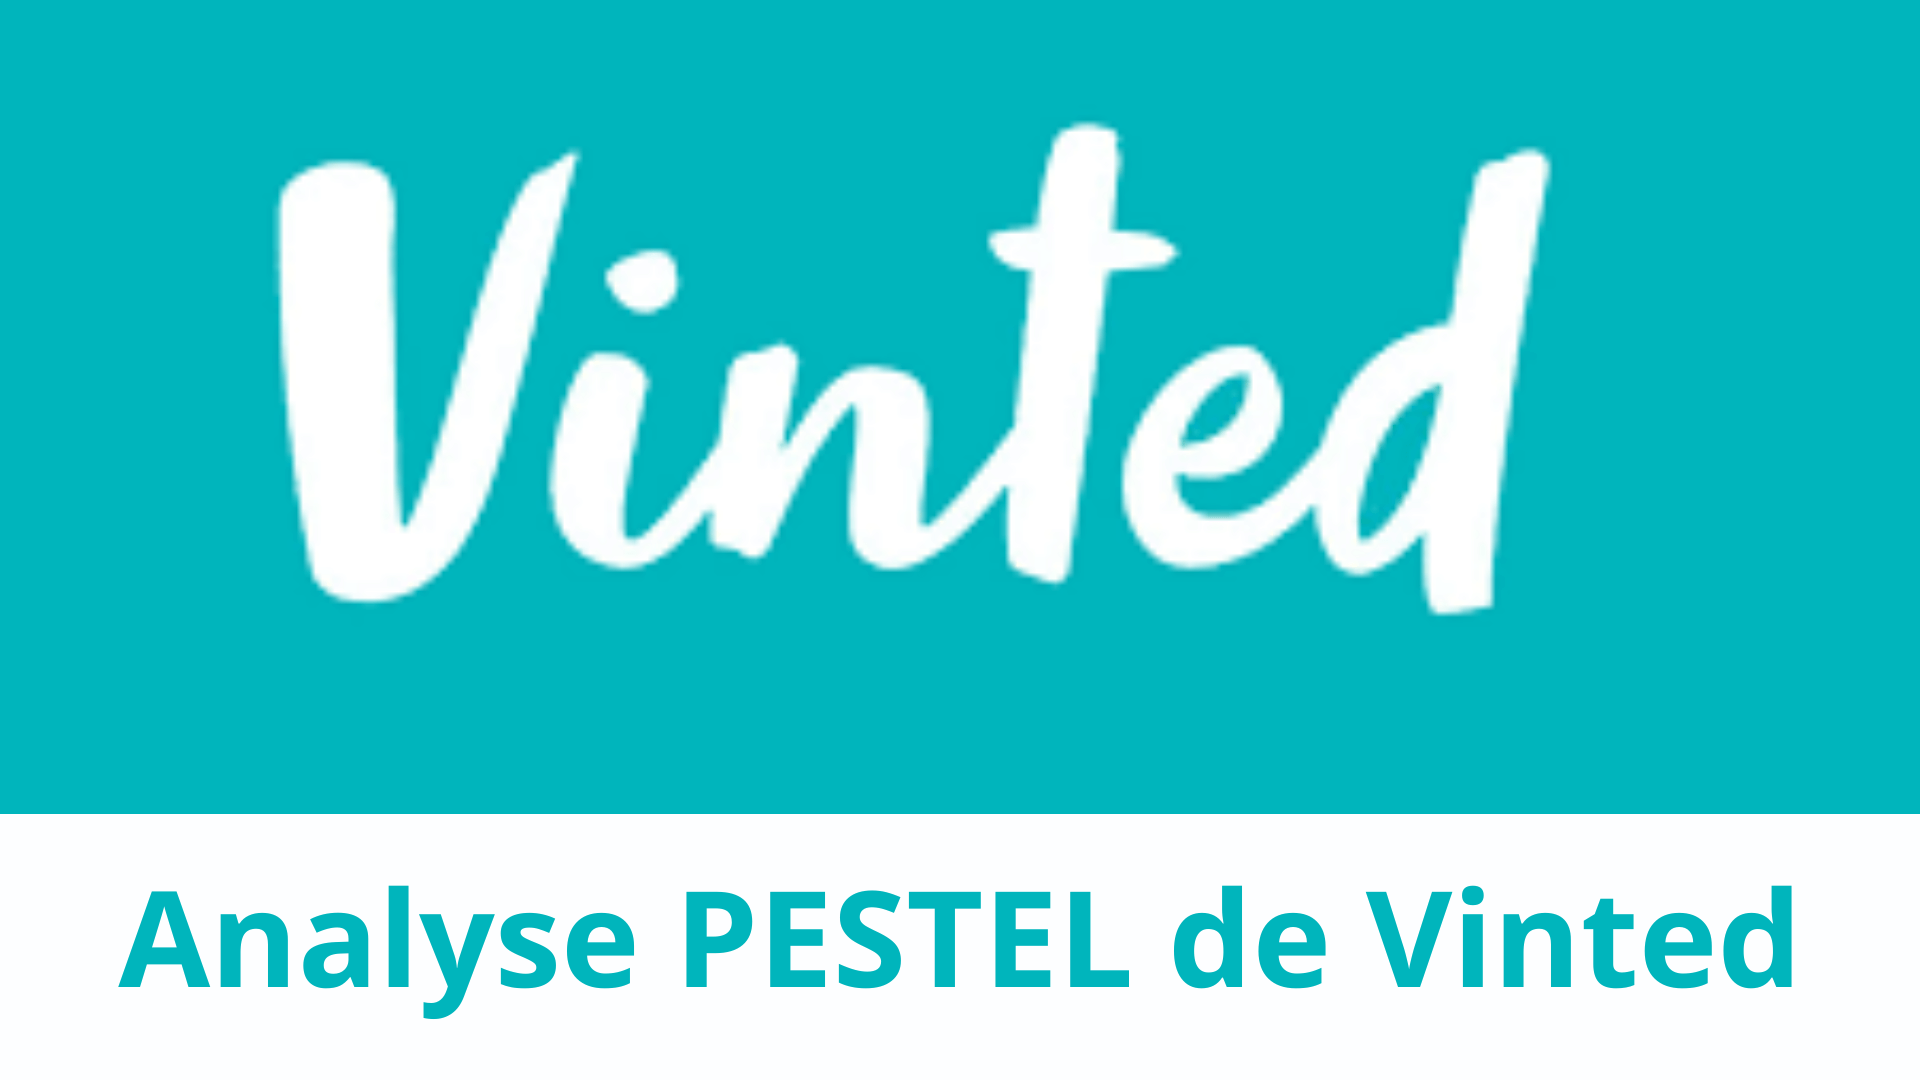 Analyse PESTEL Vinted en France, étude du macro-environnement de Vinted